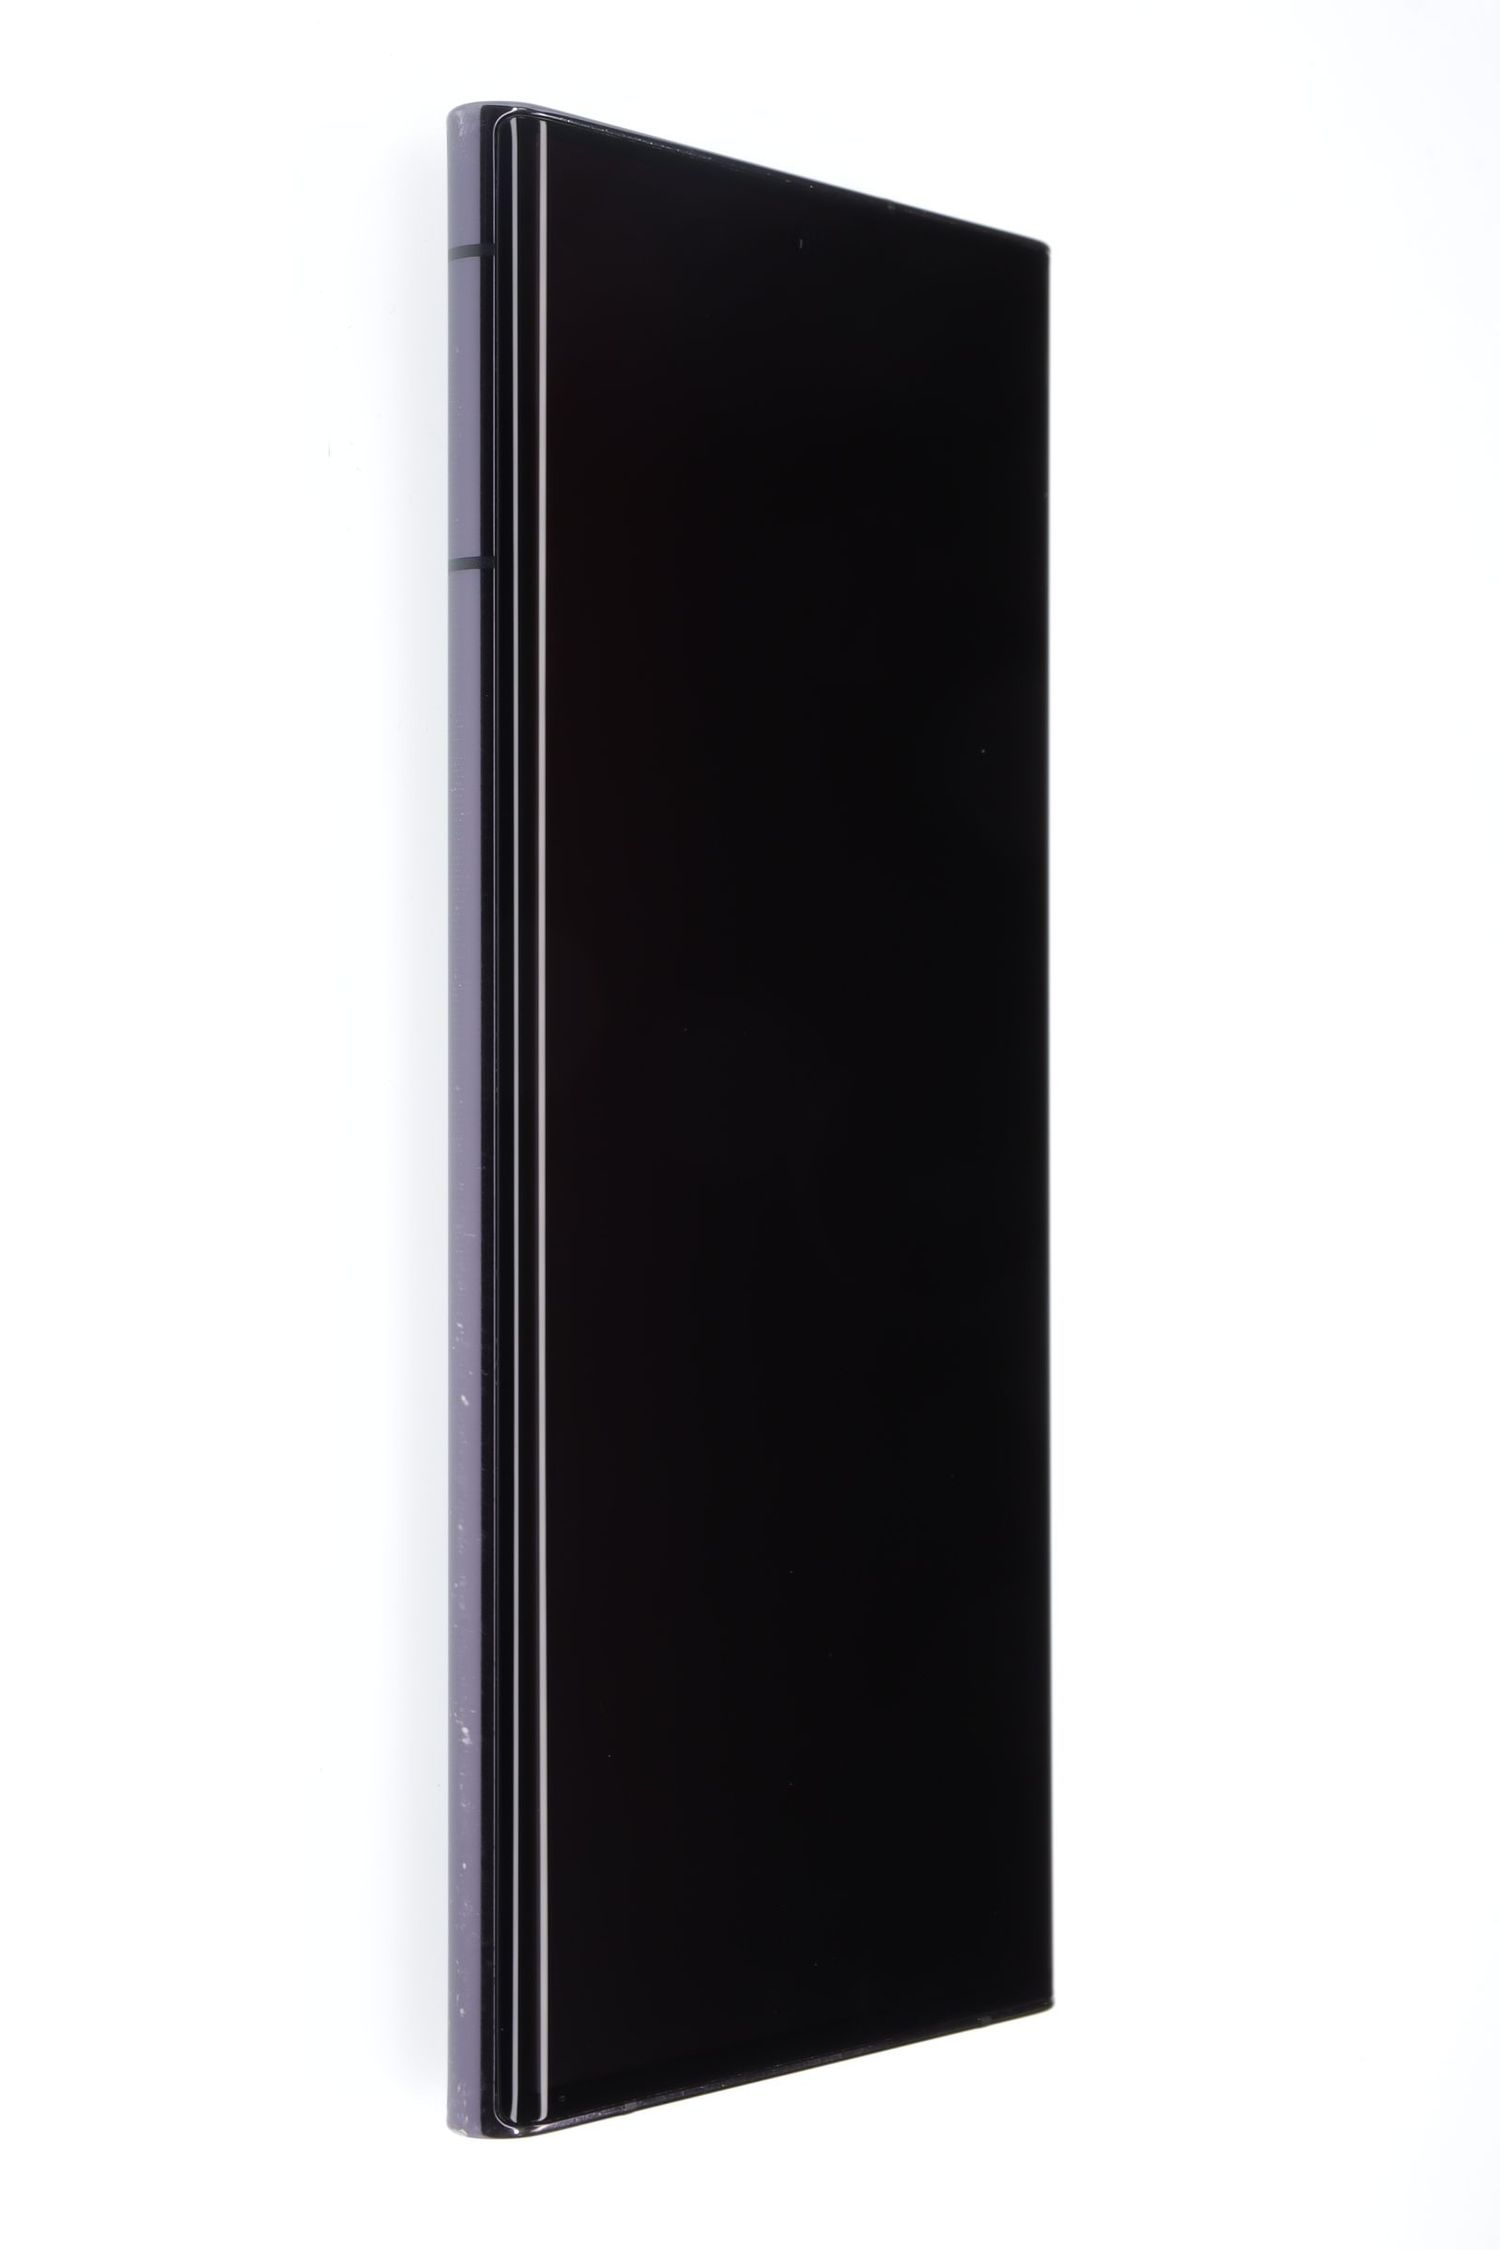 Telefon mobil Samsung Galaxy S22 Ultra 5G Dual Sim, Phantom Black, 256 GB, Foarte Bun